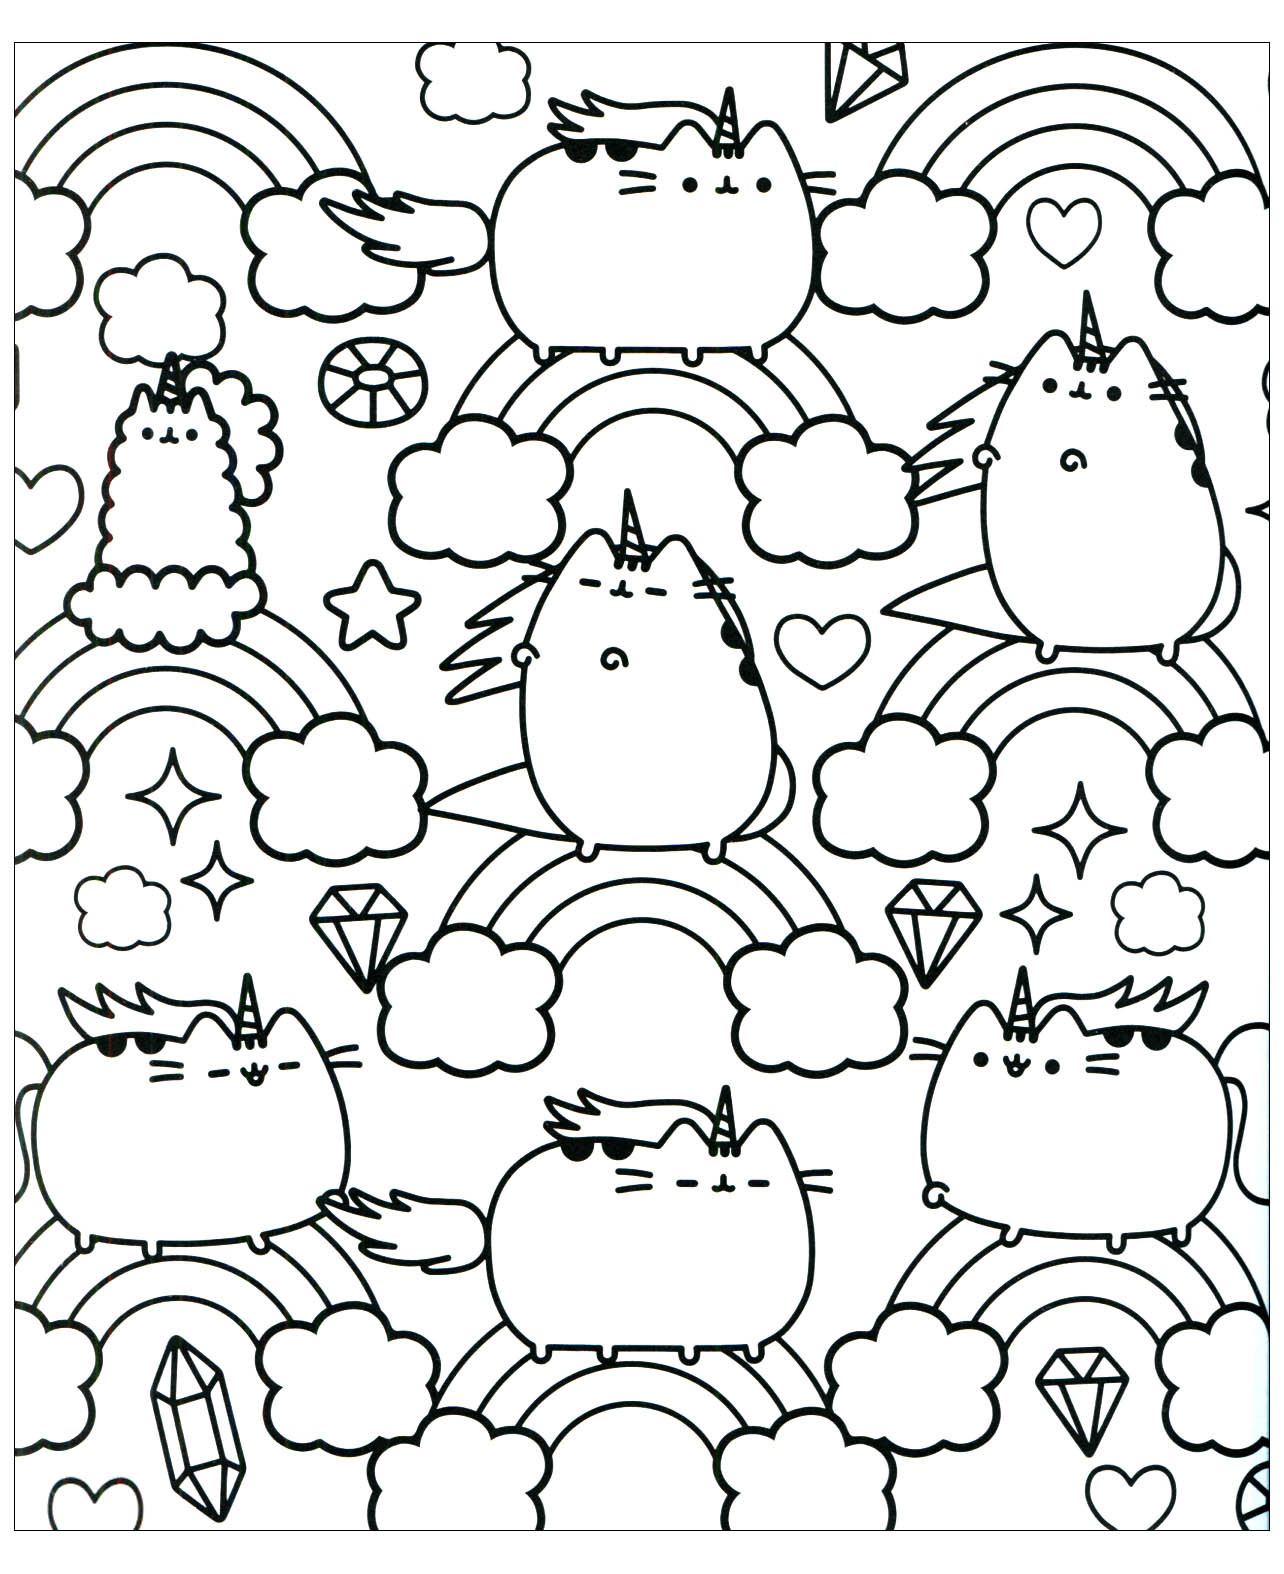 Kawaii Coloring Pages For Adults
 Kawaii pusheen and rainbow Doodle Art Doodling Adult